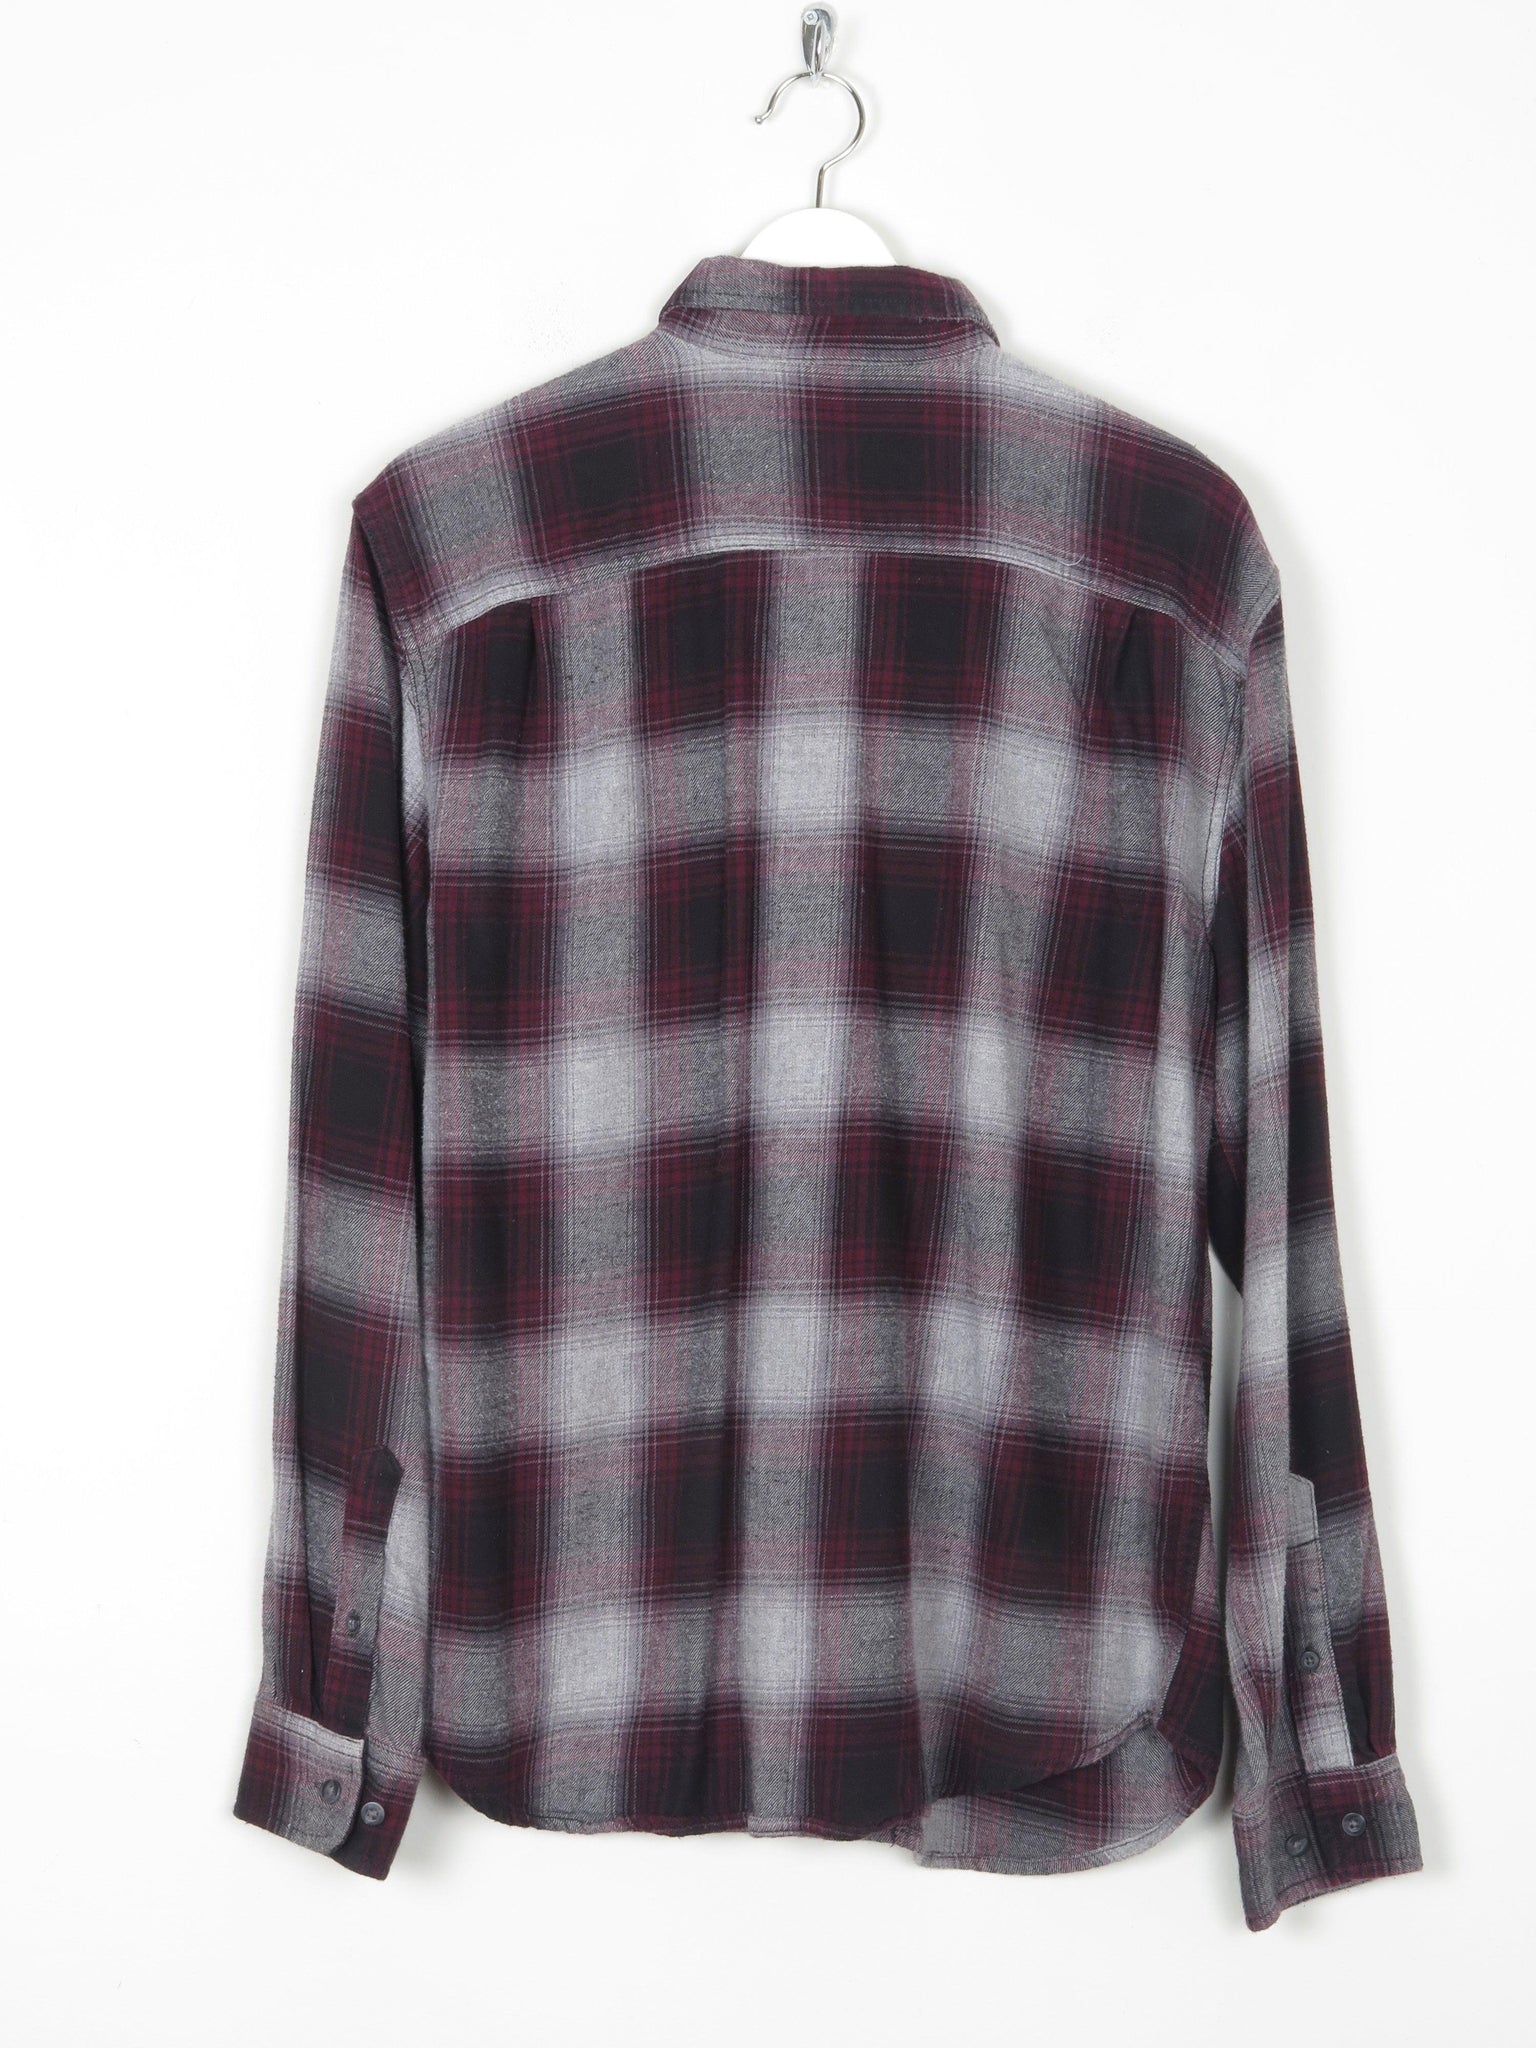 Men's Wine & Grey Vintage Style Flannel Shirt M - The Harlequin